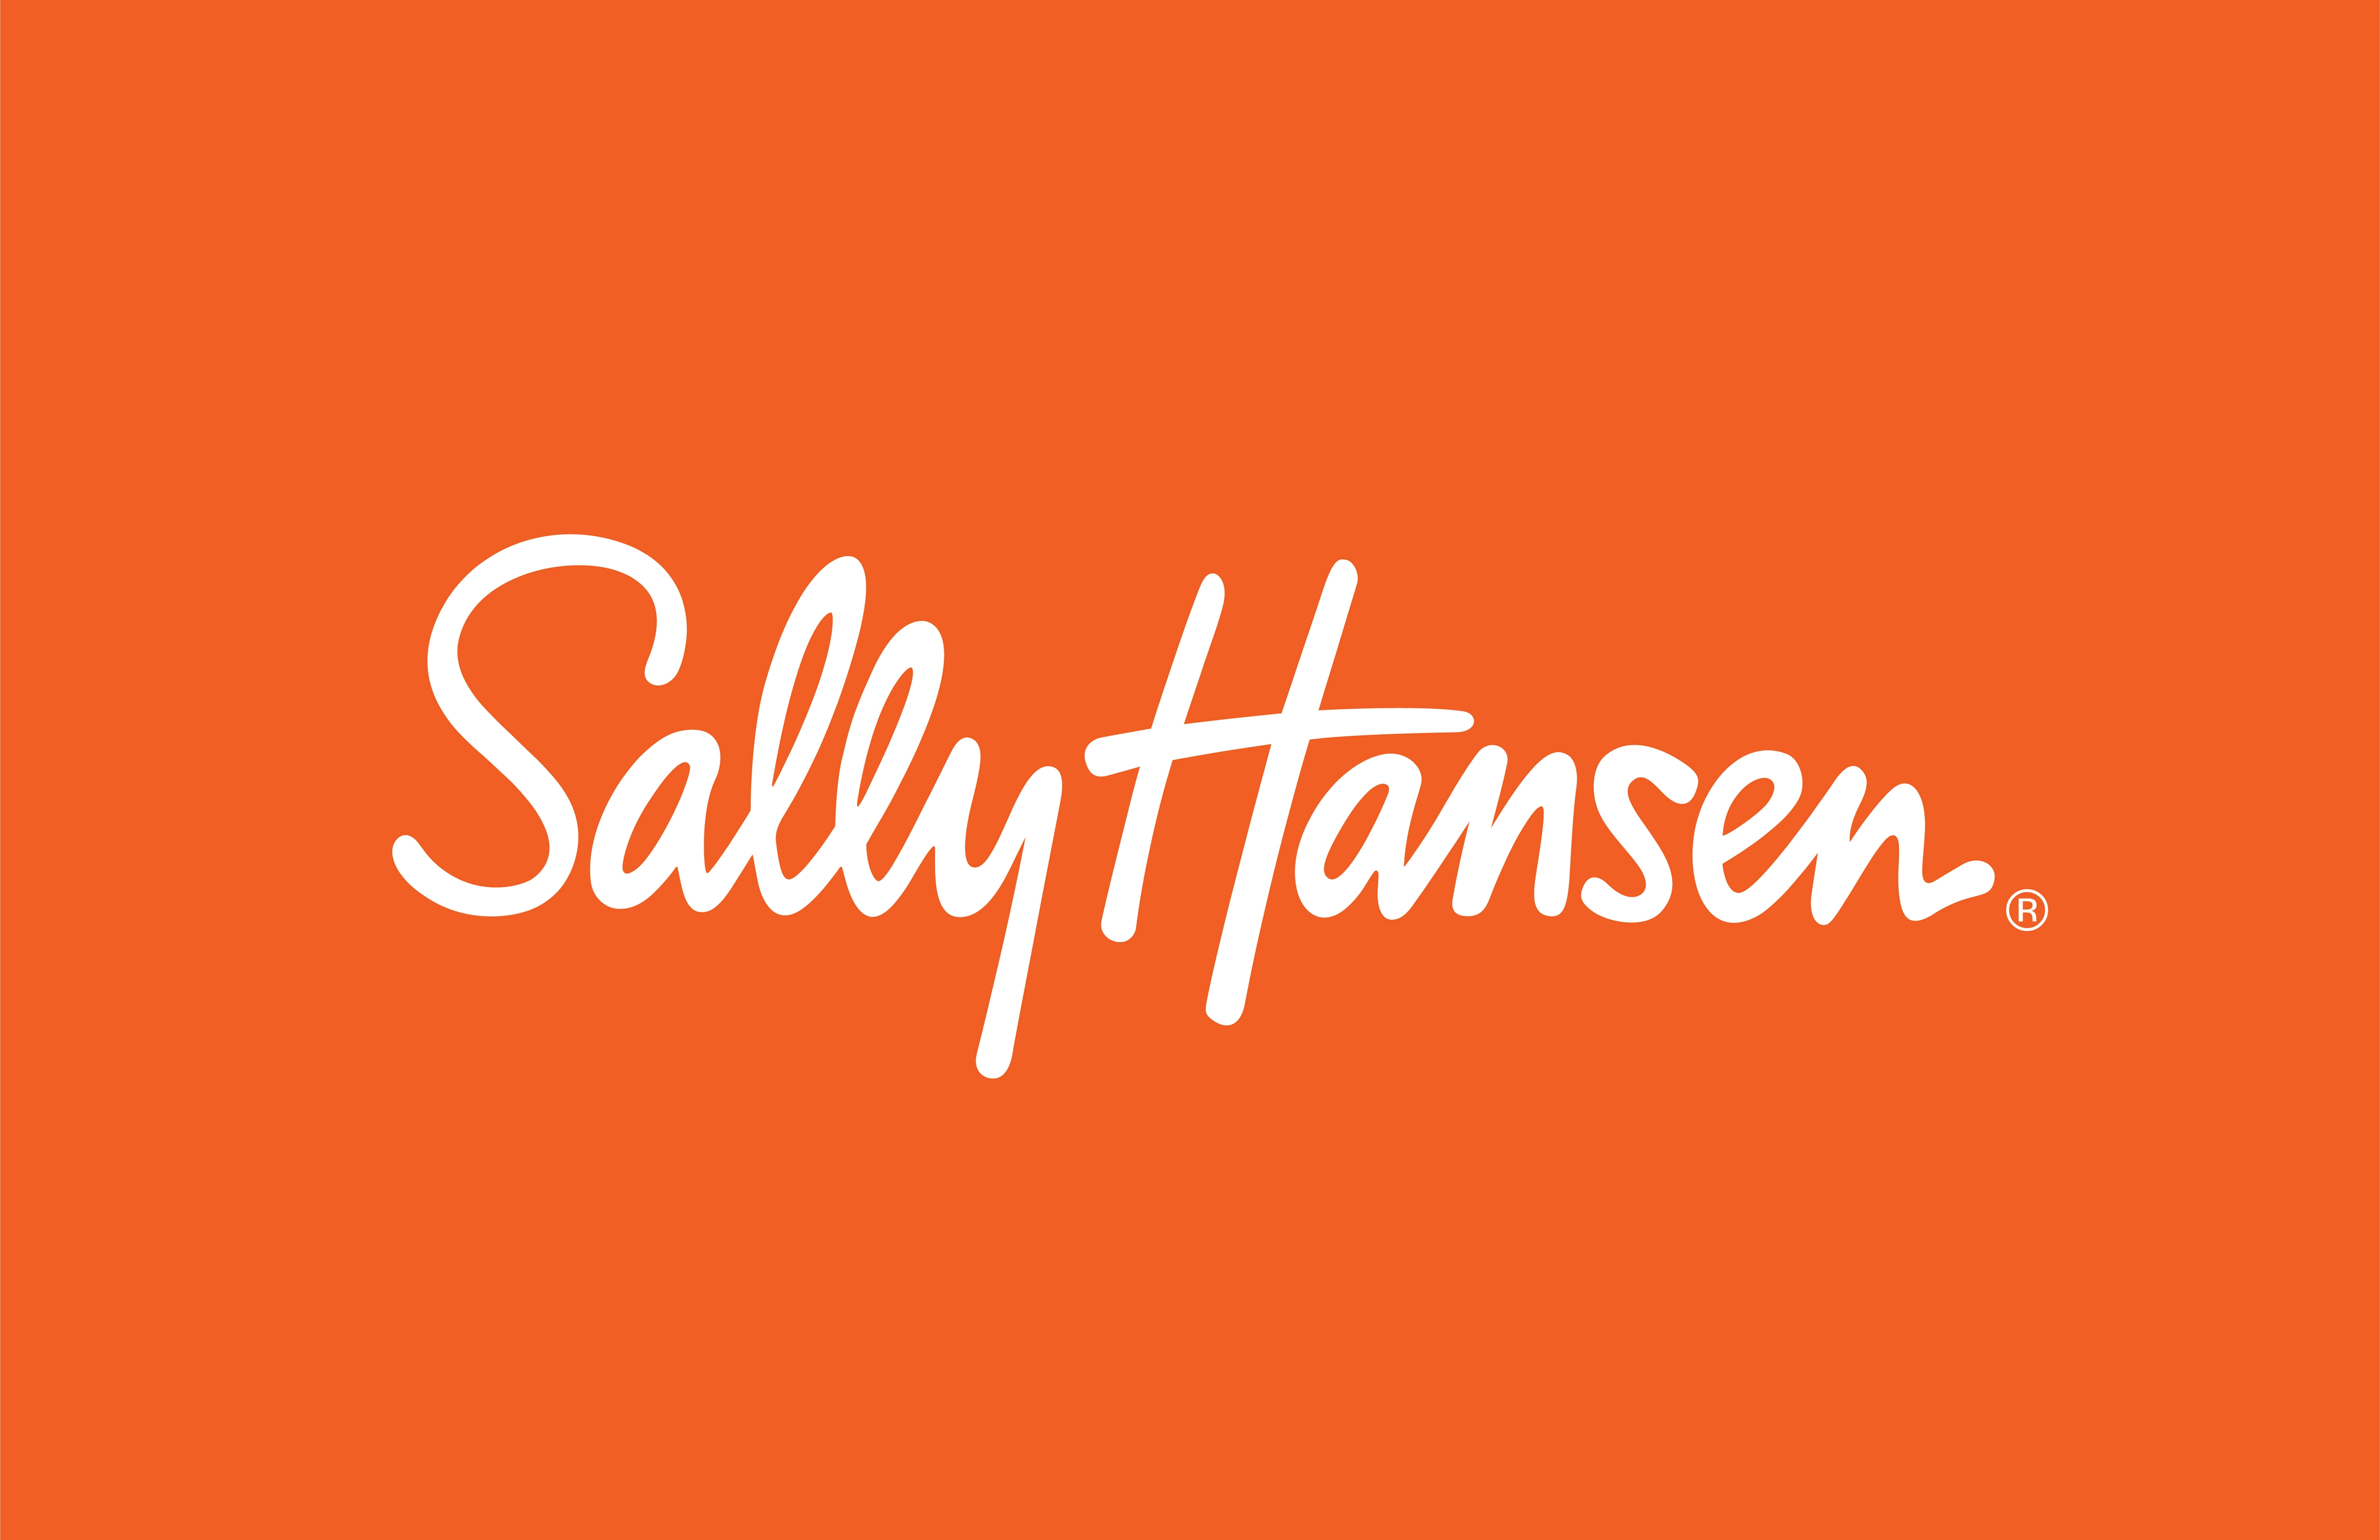 Sally Hansen Diamond Strength French Manicure 3 Pc Set - image 5 of 5